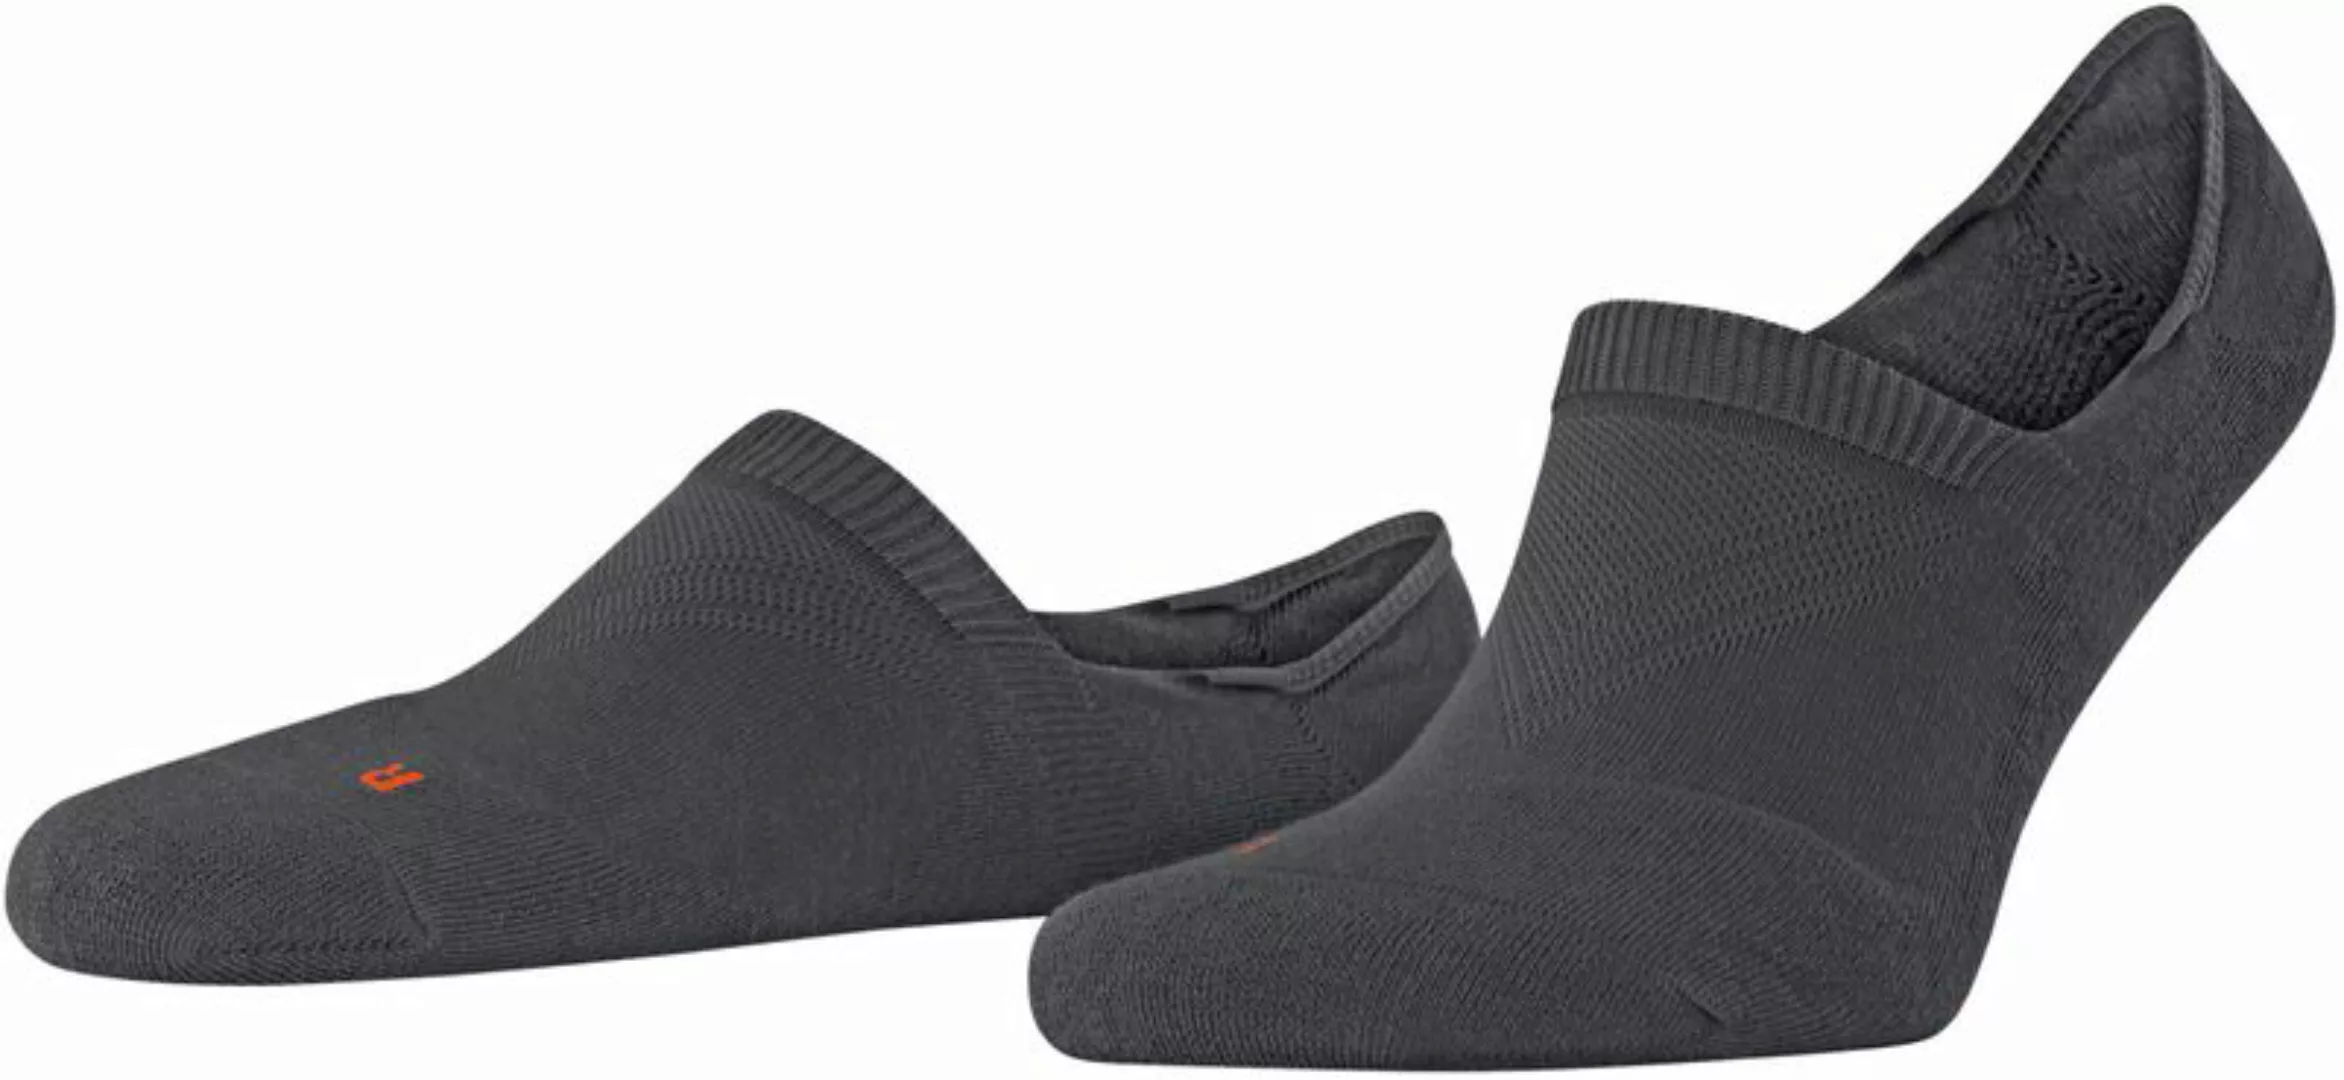 FALKE Cool Kick Socken Dunkelgrau - Größe 44-45 günstig online kaufen